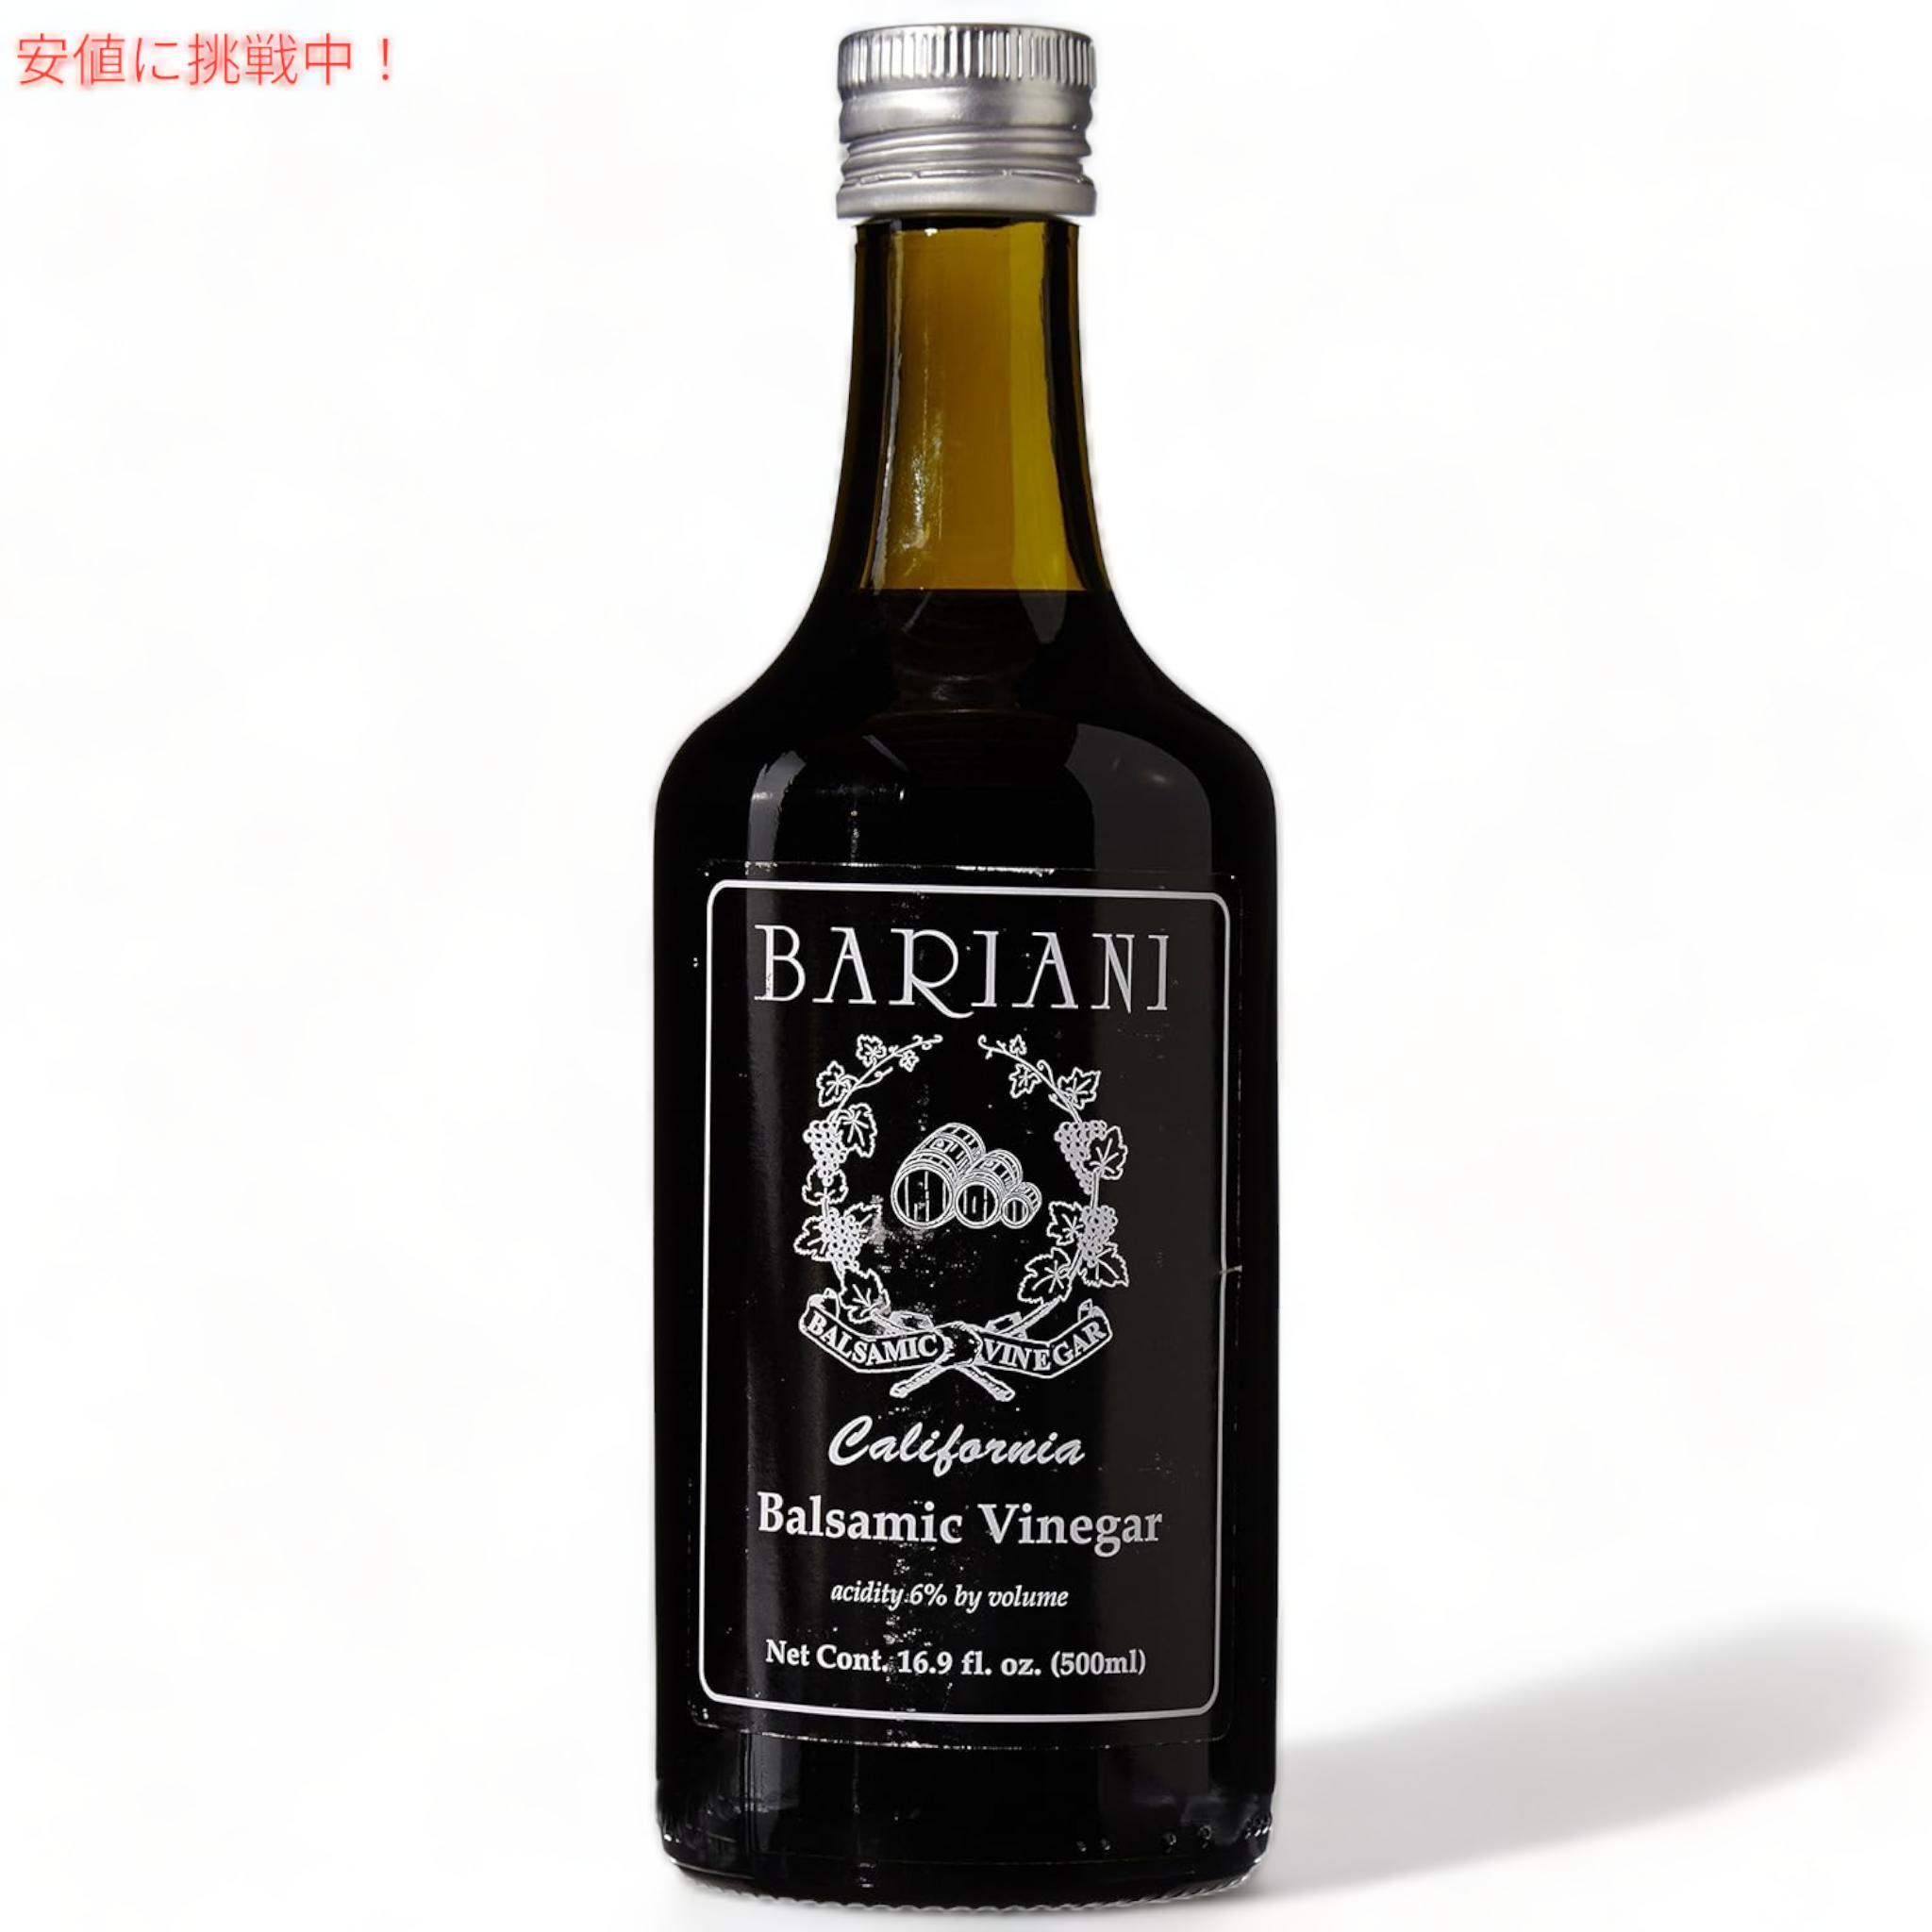 Bariani バリア二 カリフォルニア バルサミコ酢 500ml California Balsamic Vinegar 16.9oz